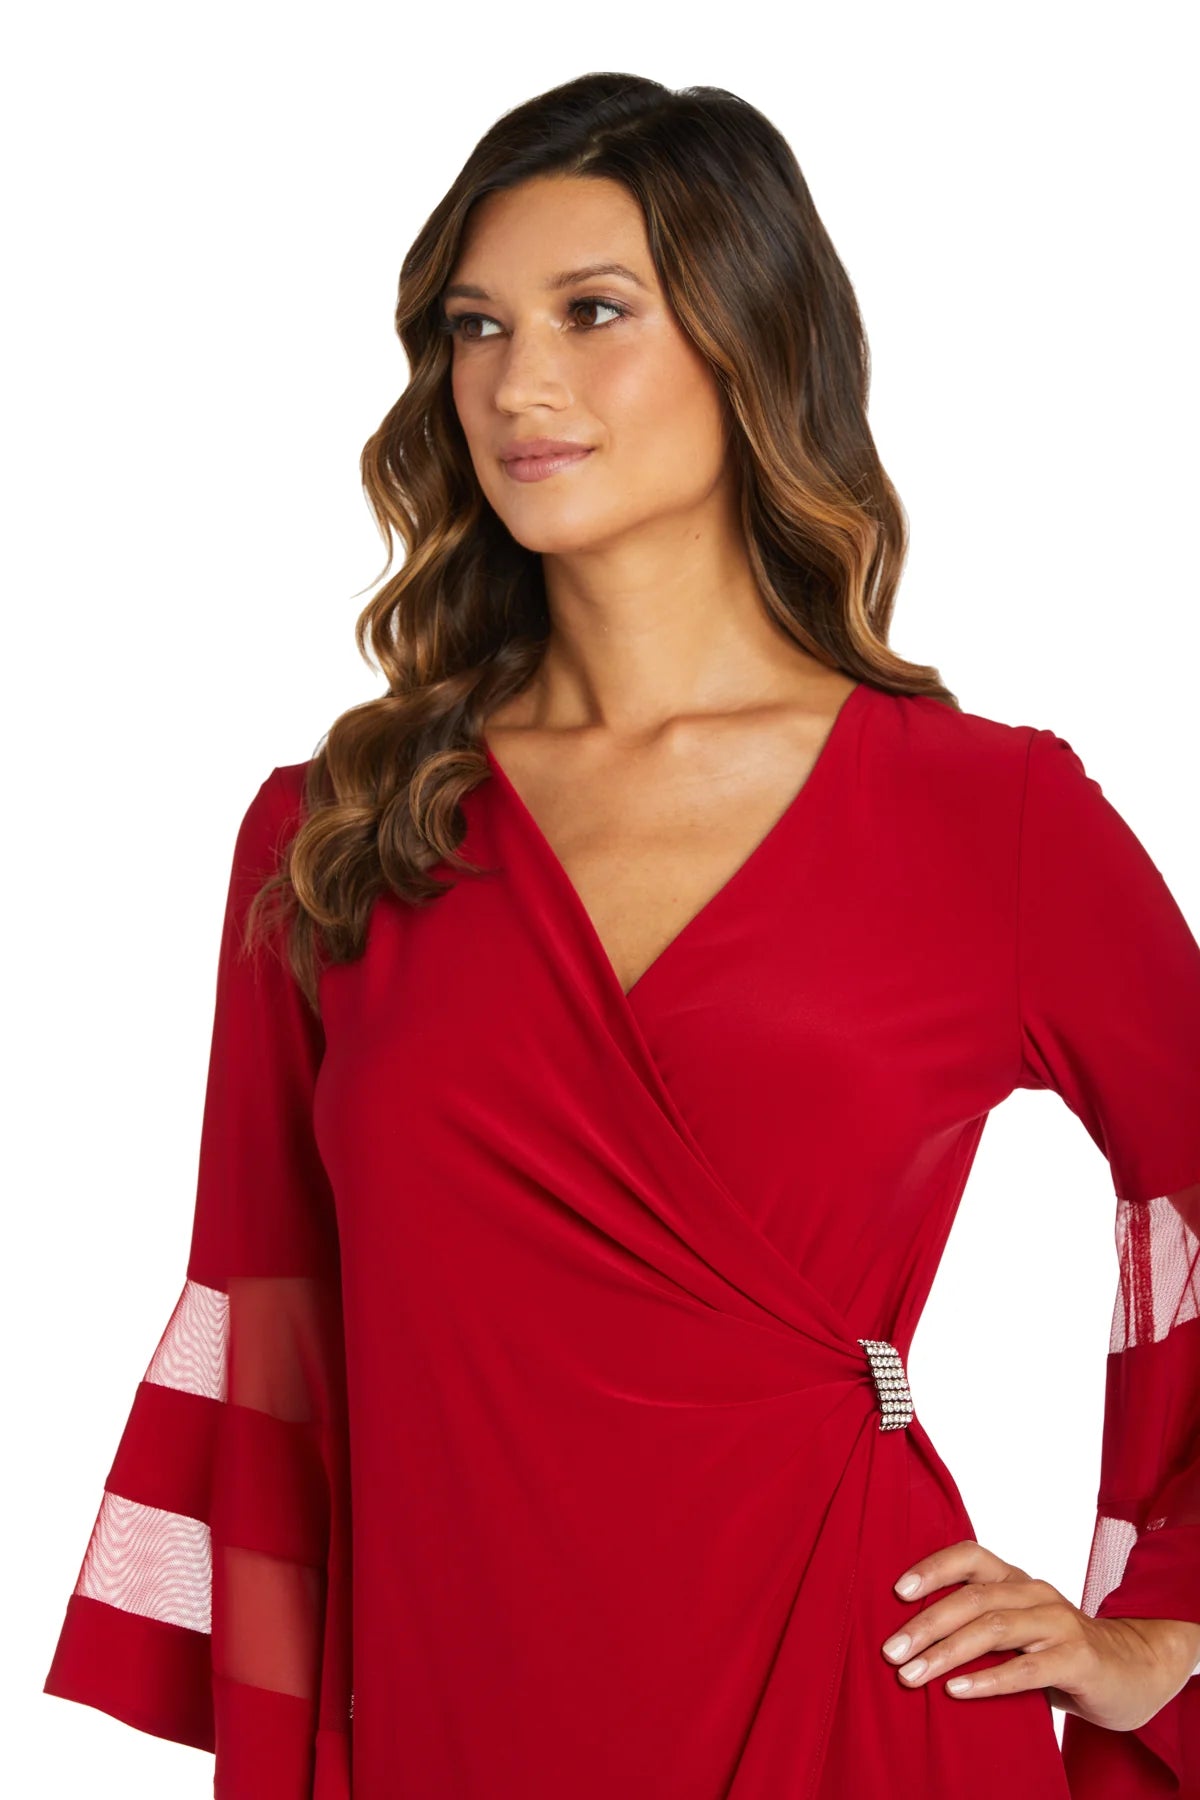 3/4 Sleeve Red wraparound dress